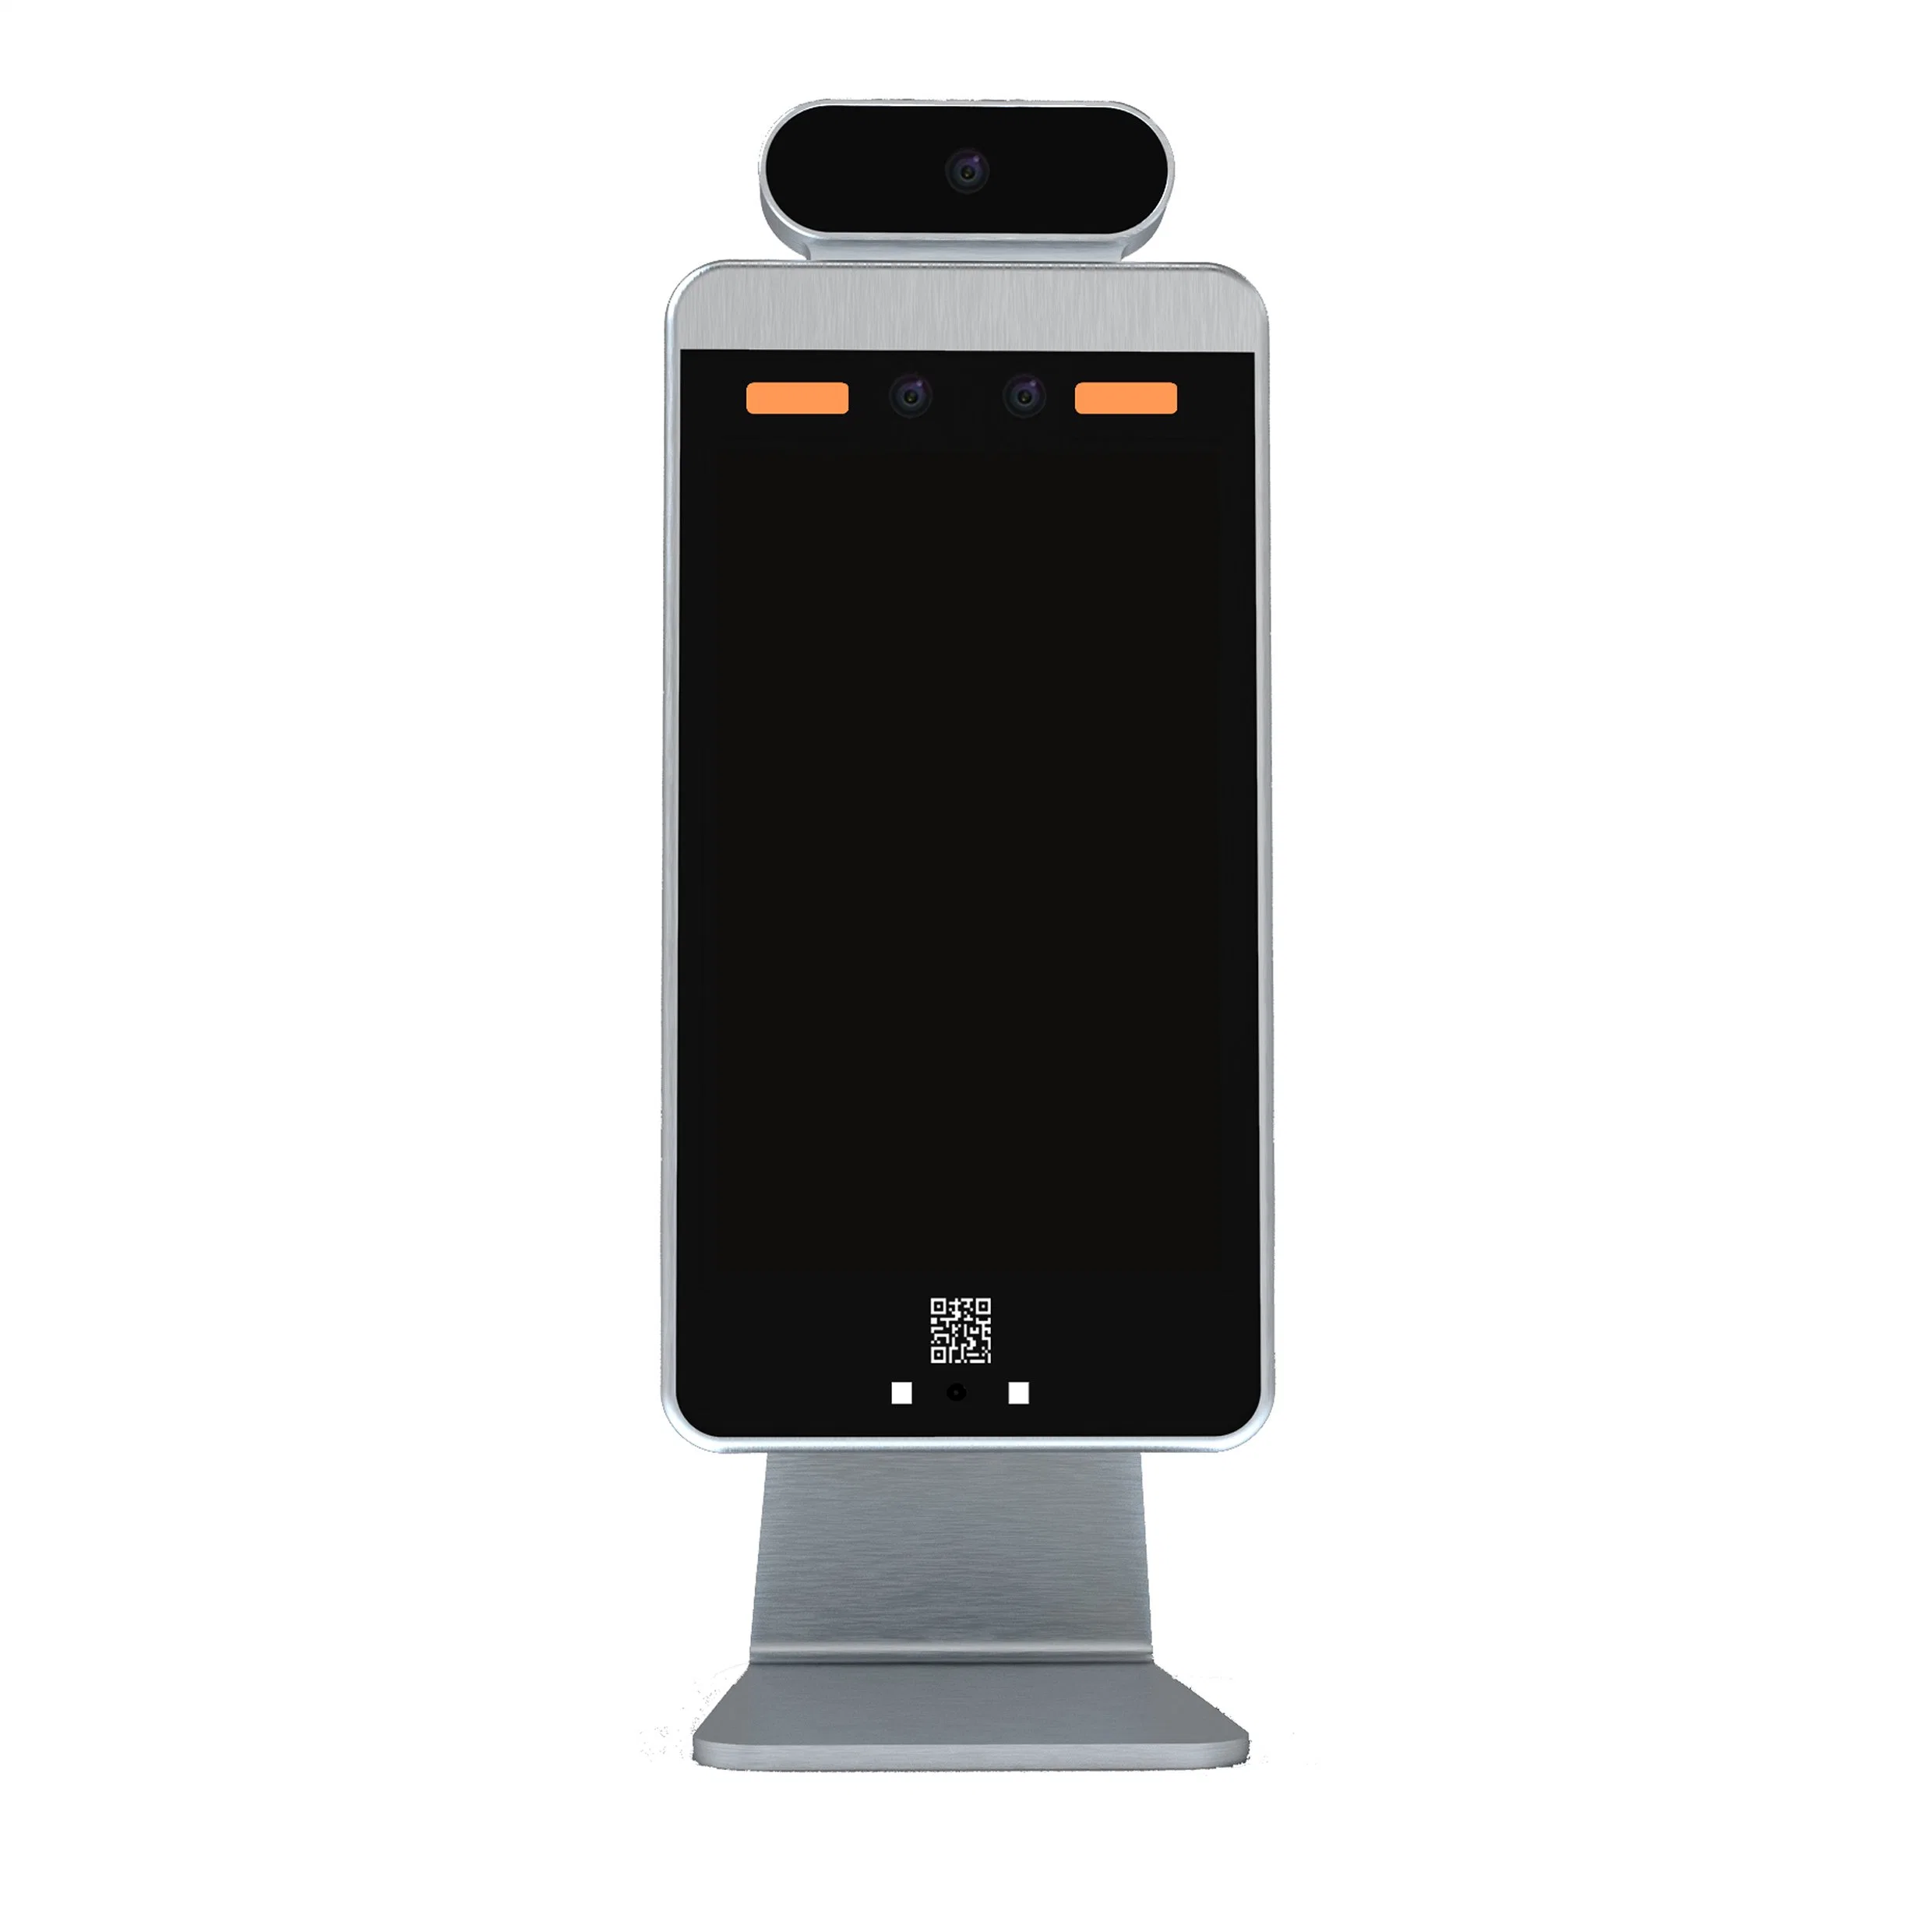 Body Temperature Detector Face Recognition Panel Access Control EU Digital Health Qr Code Reader Hongkong Evt APP Qr Code Thermal Camera Scanner